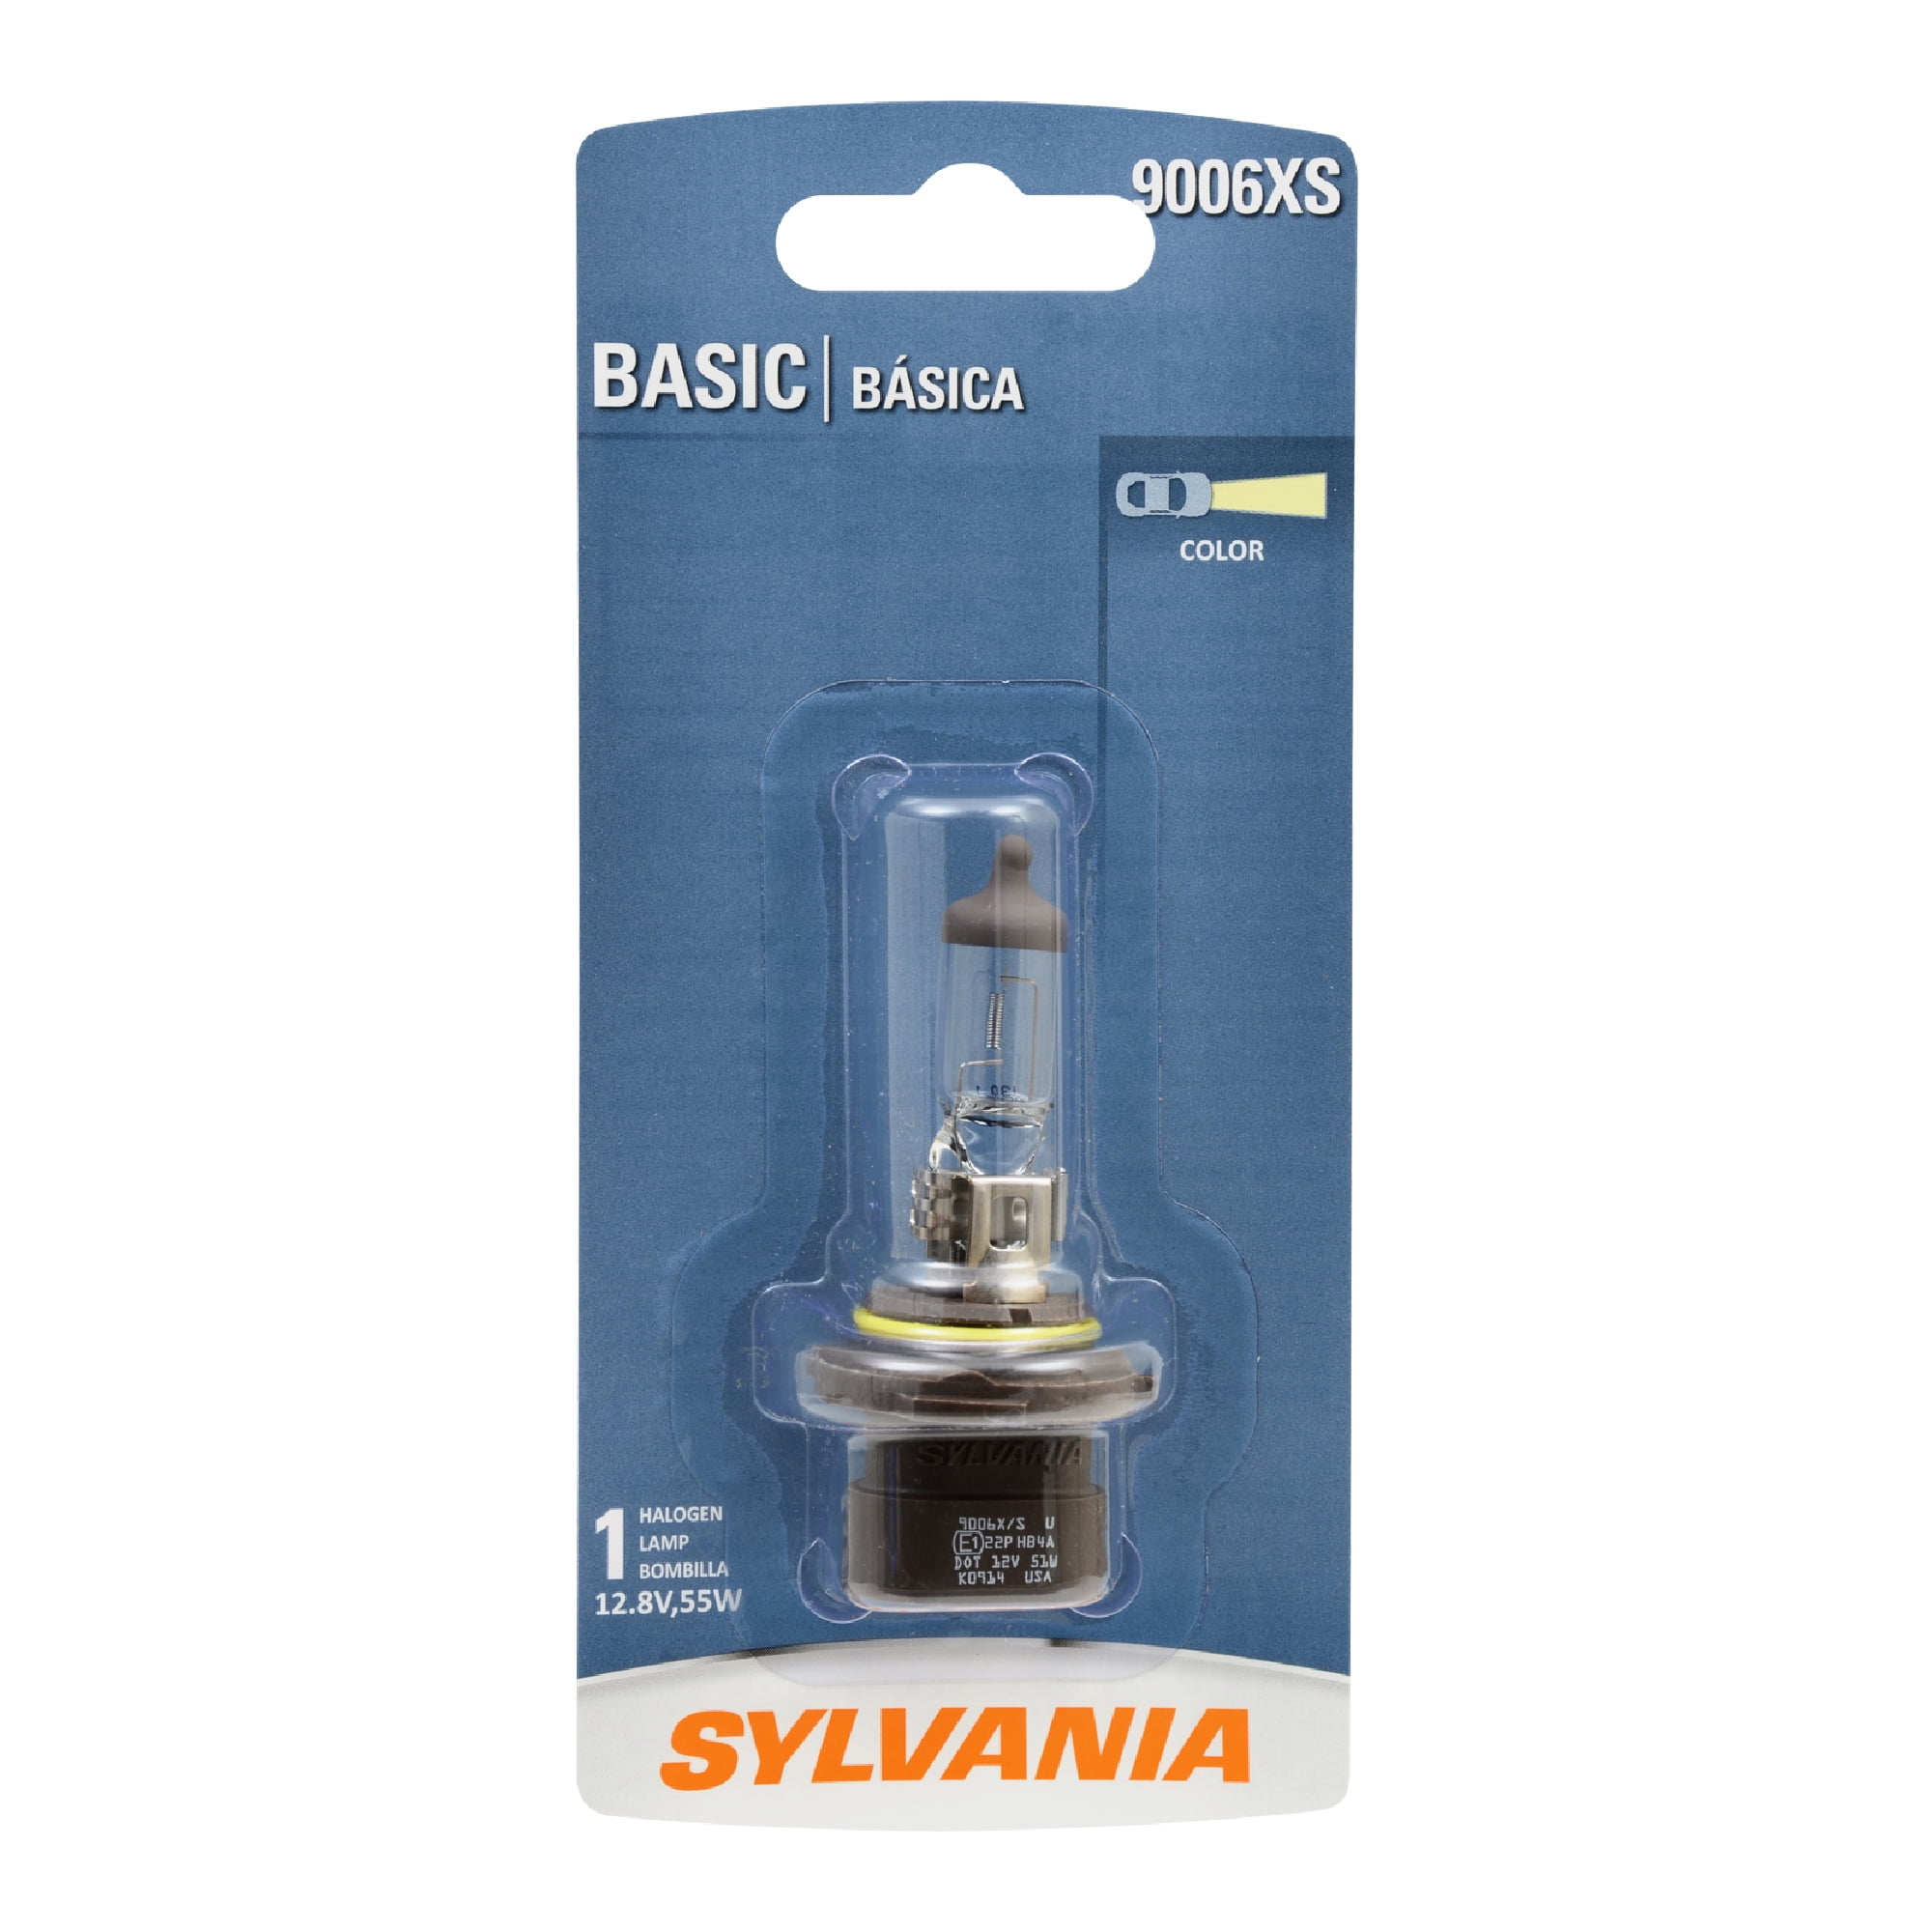 Sylvania 9006XS Basic Auto Halogen Headlight Bulb, Pack of 1.